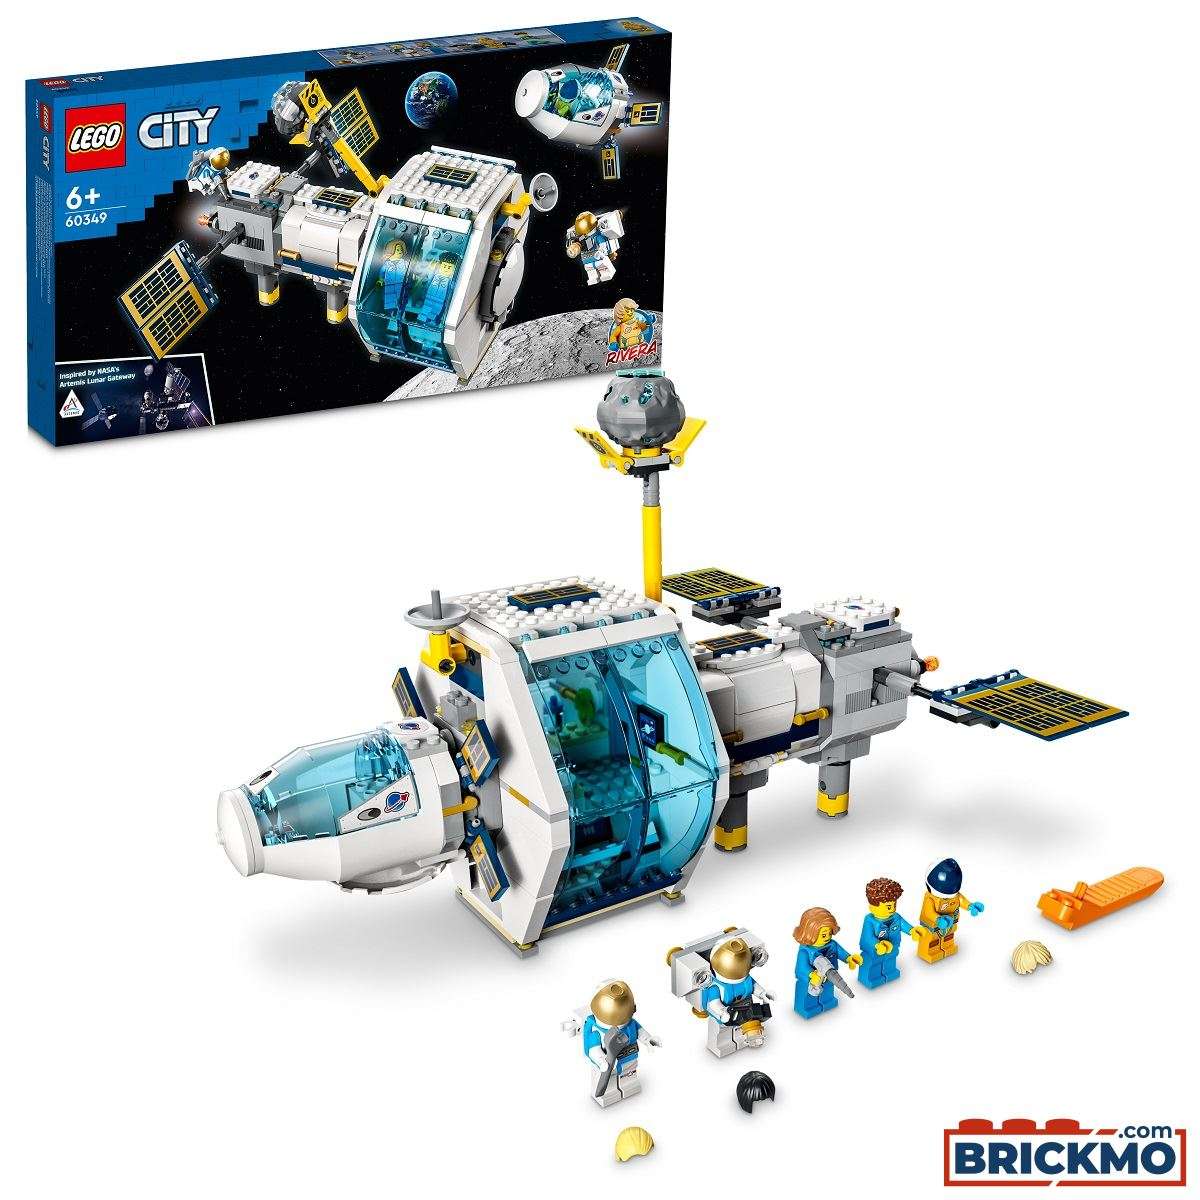 LEGO City 60349 Weltraum Mond-Raumstation 60349